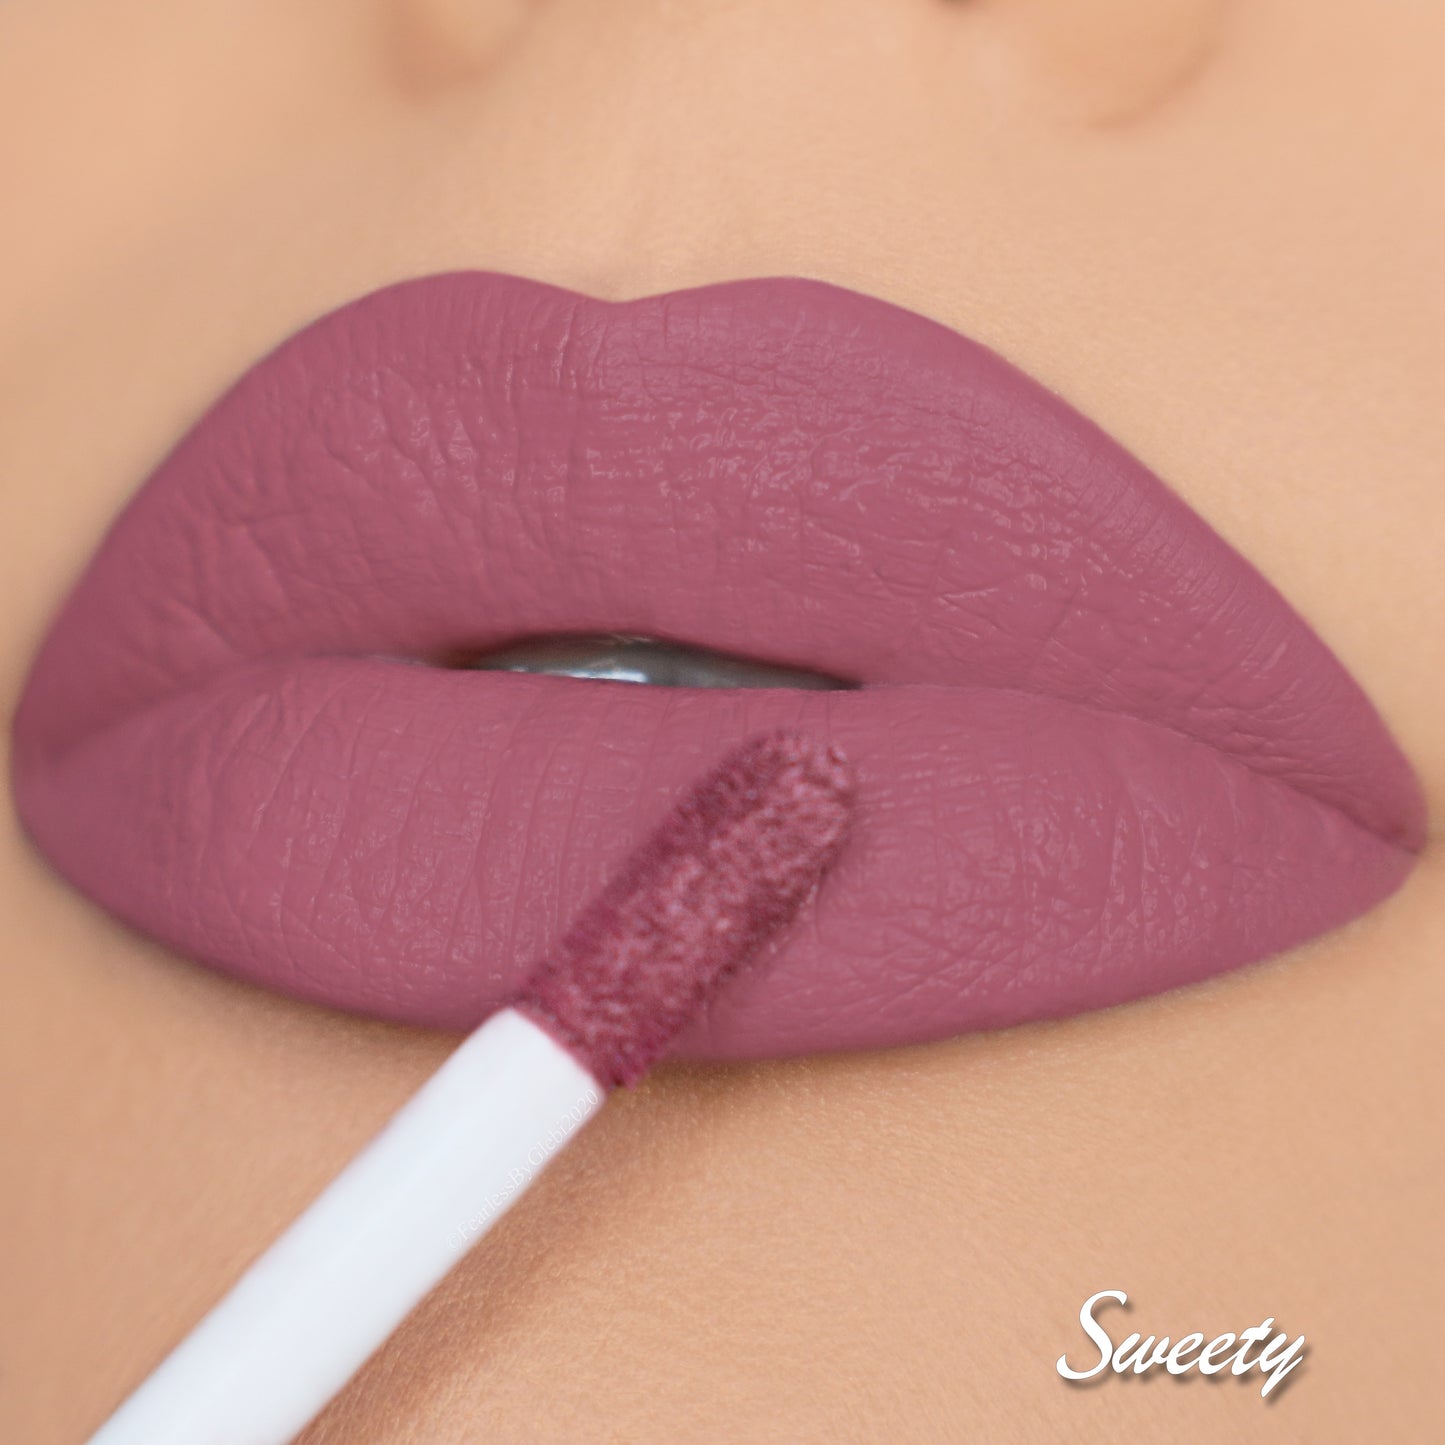 “Sweety” Matte Liquid Lipstick